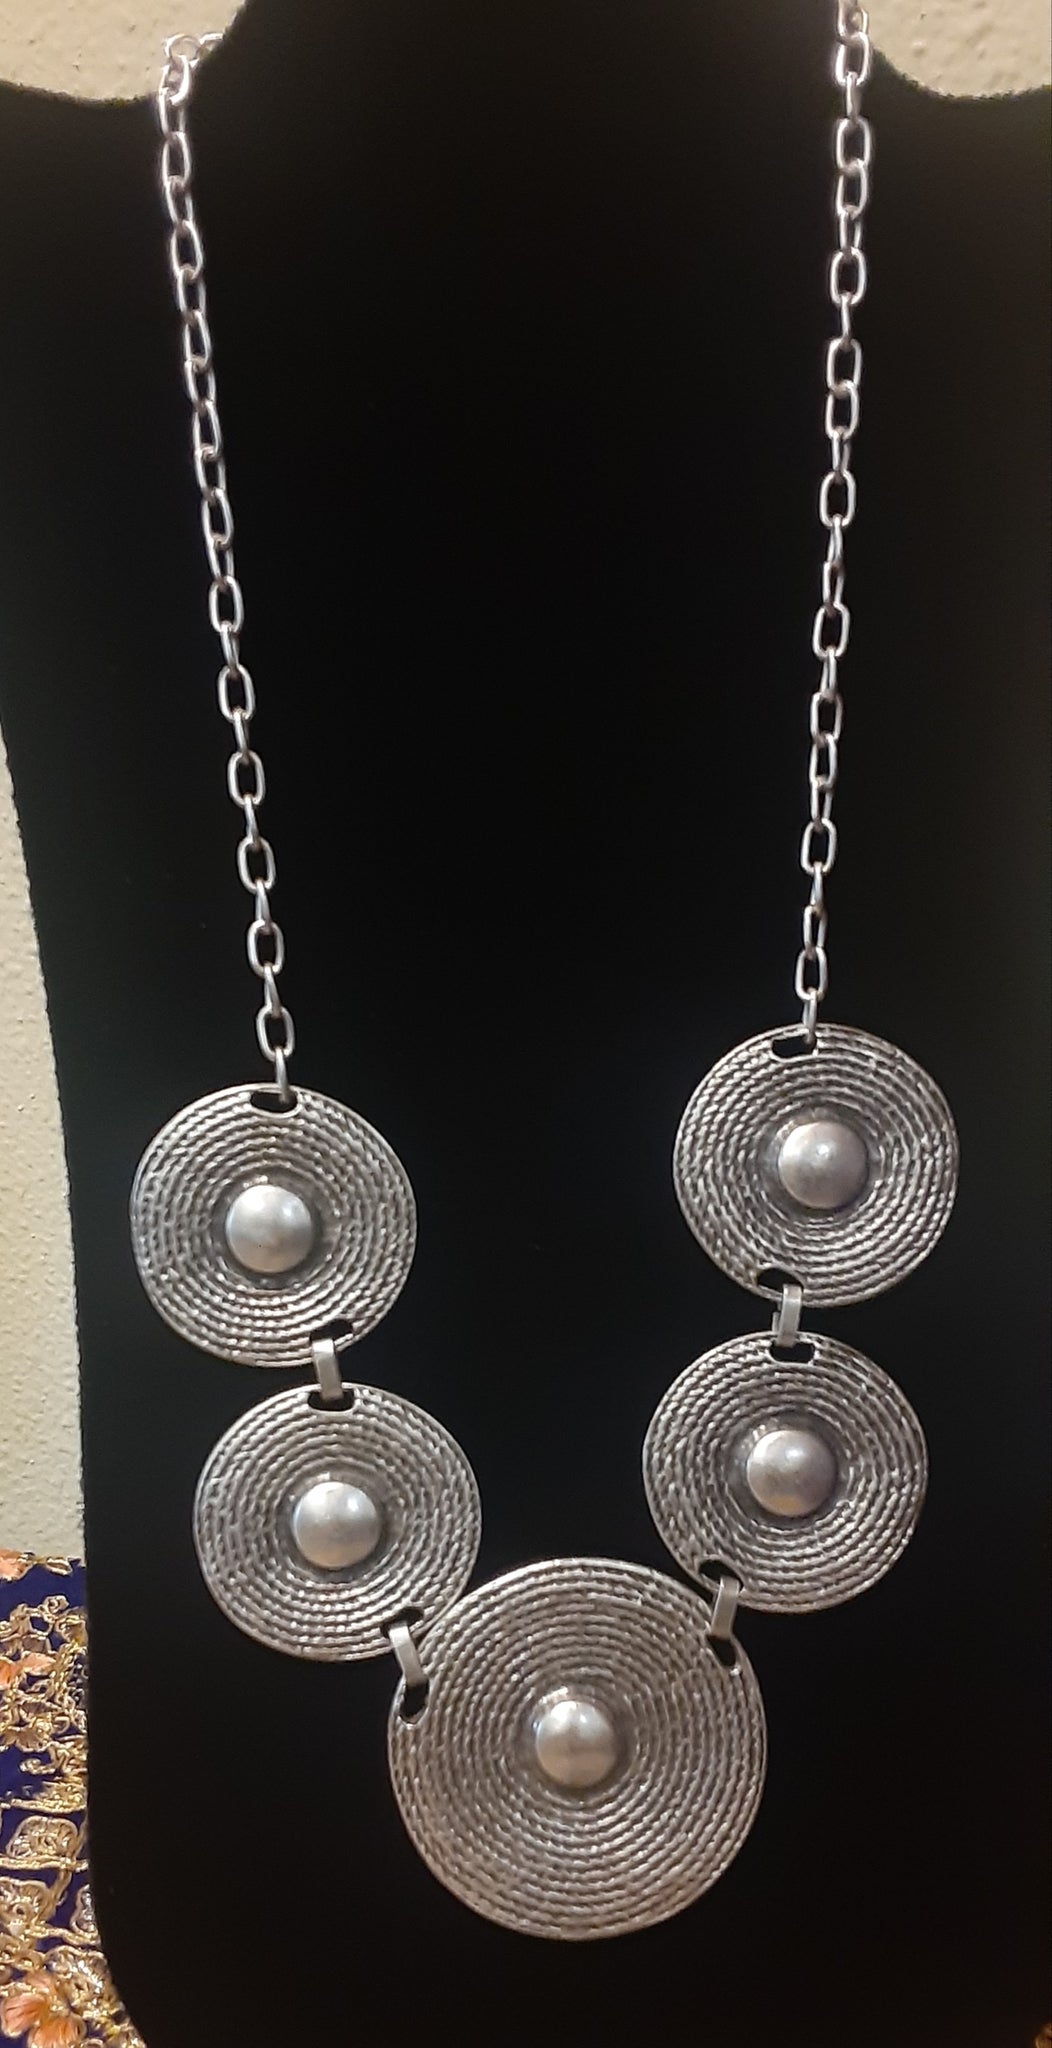 Turkish Necklace - Large Circles